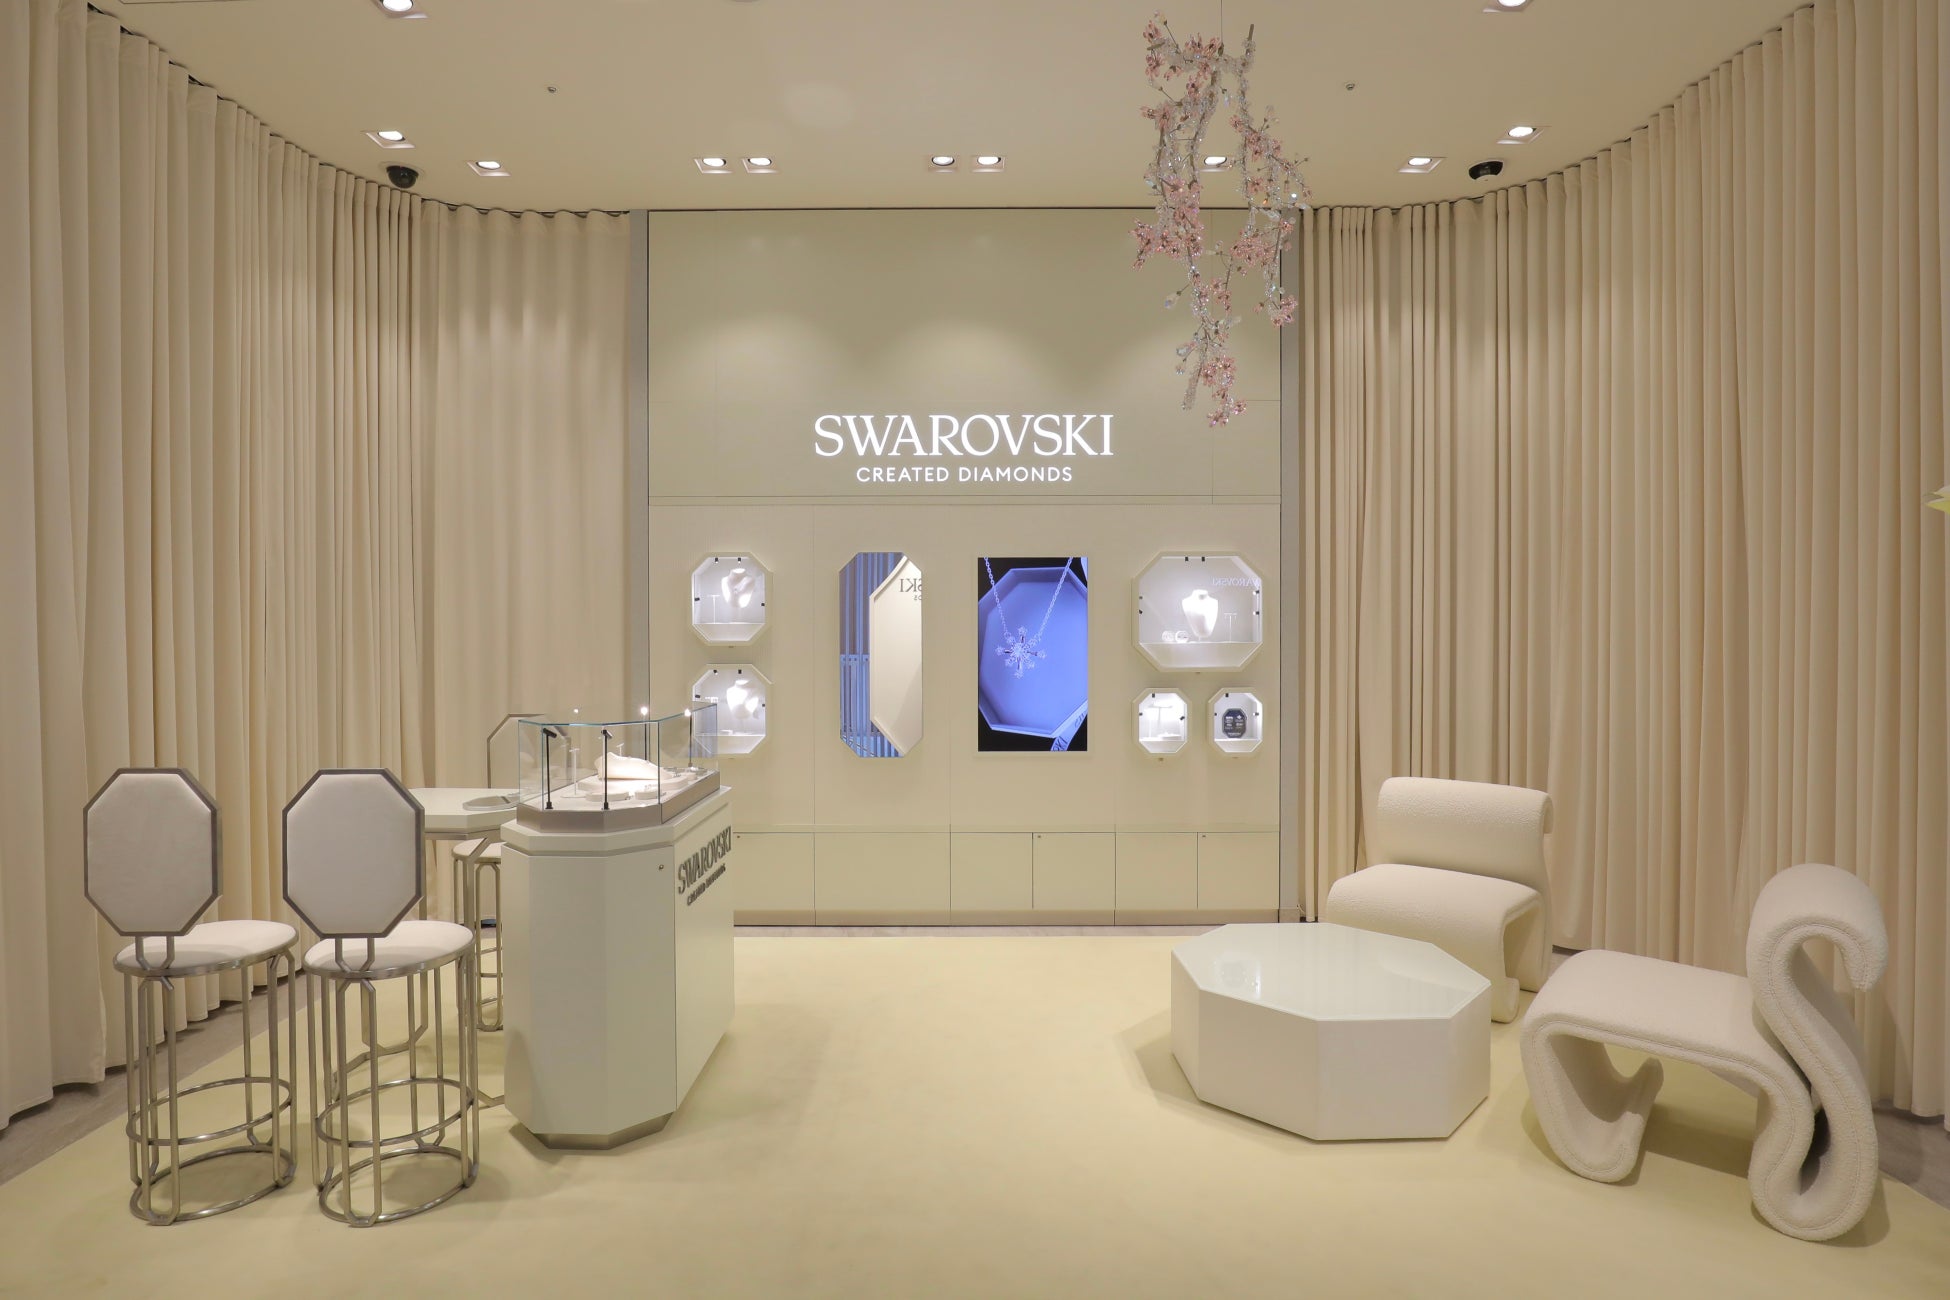 Swarovski Created Diamondsコレクションローンチイベントに滝沢眞規子さん、桜田通さんなどセレブリティが来場